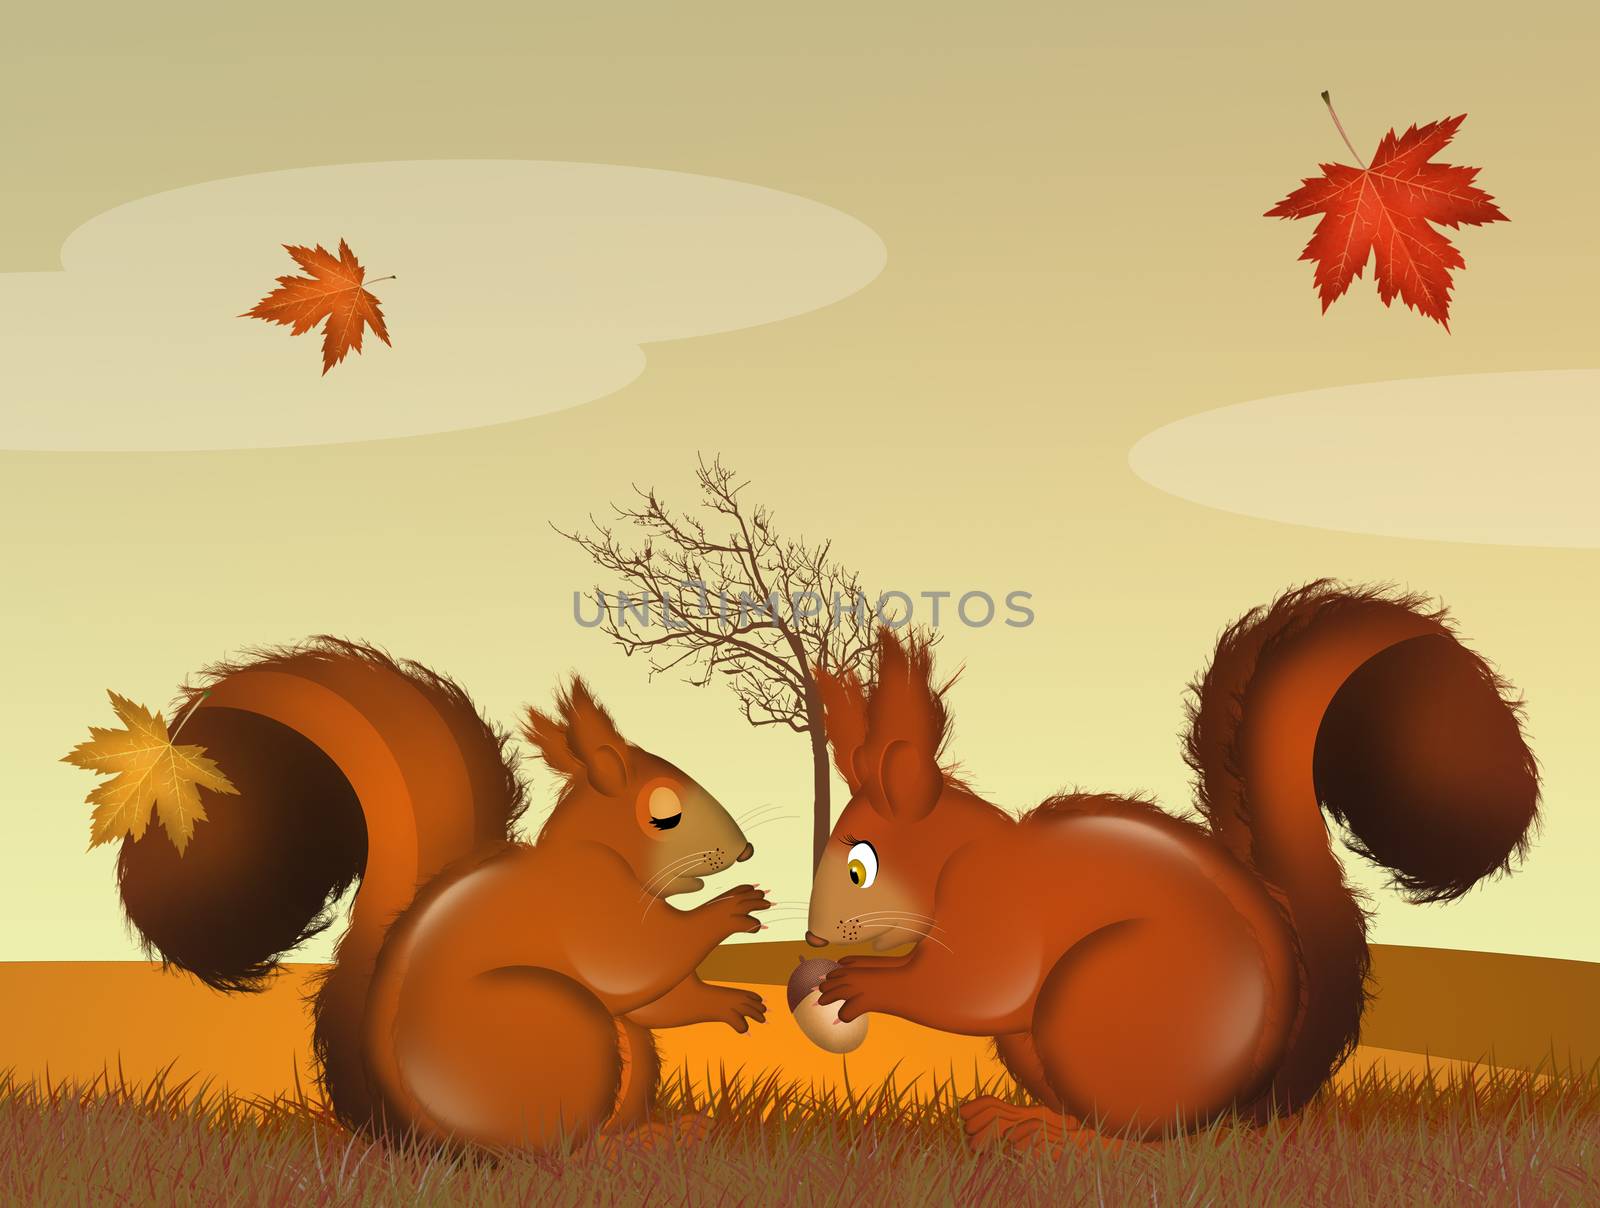 illustration of squirrels couple